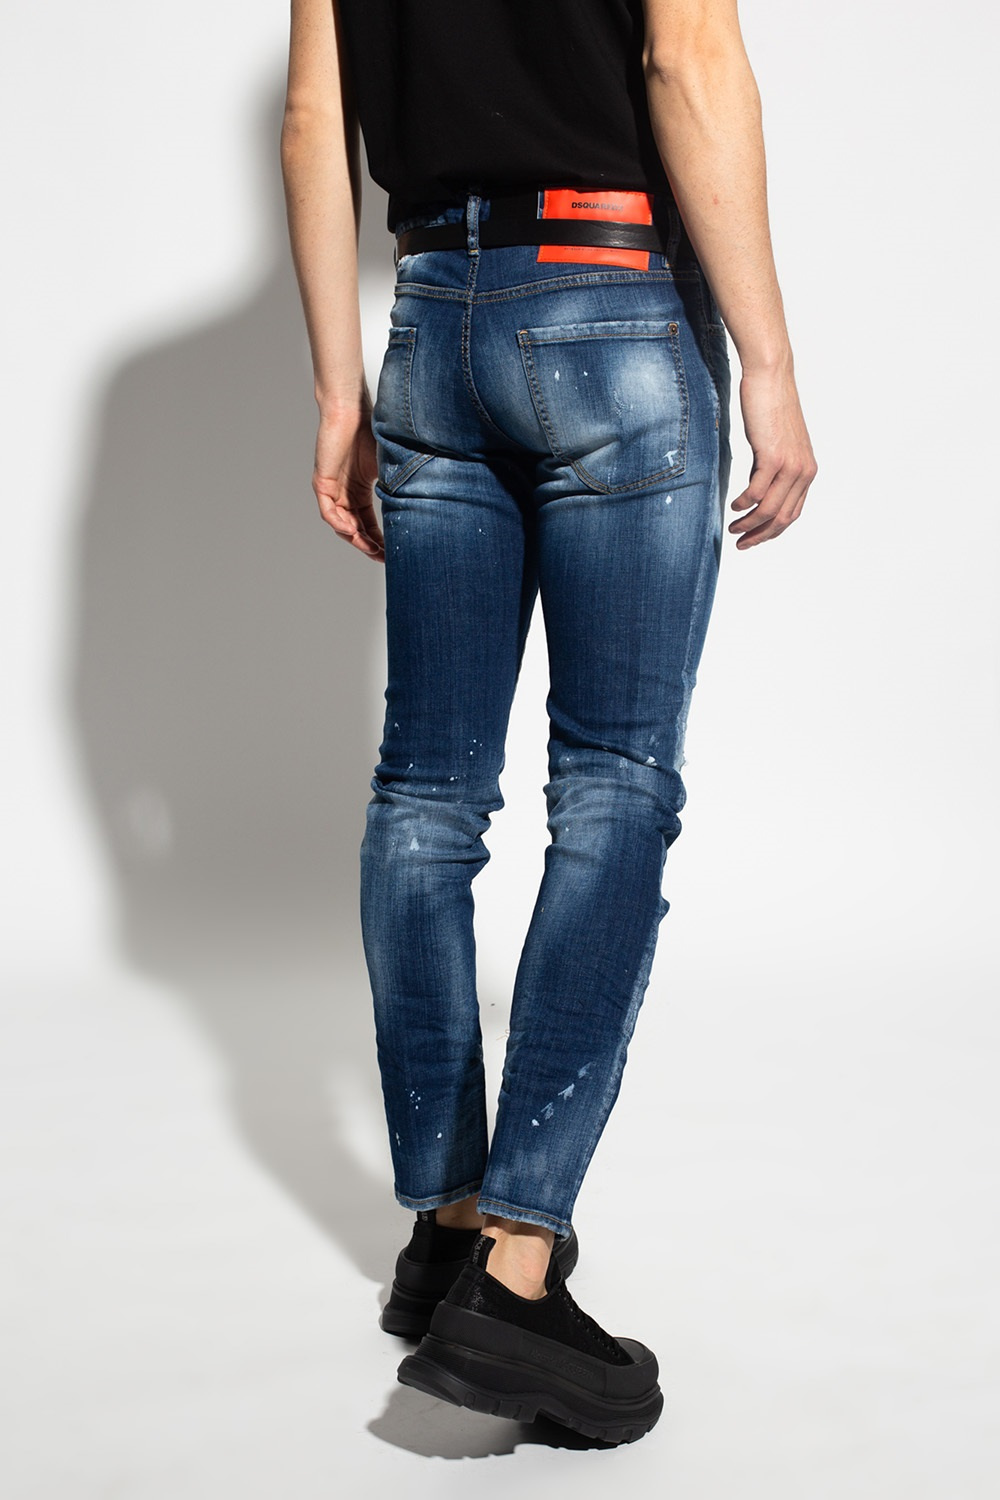 Dsquared2 'Cool Guy' jeans | Men's Clothing | IetpShops